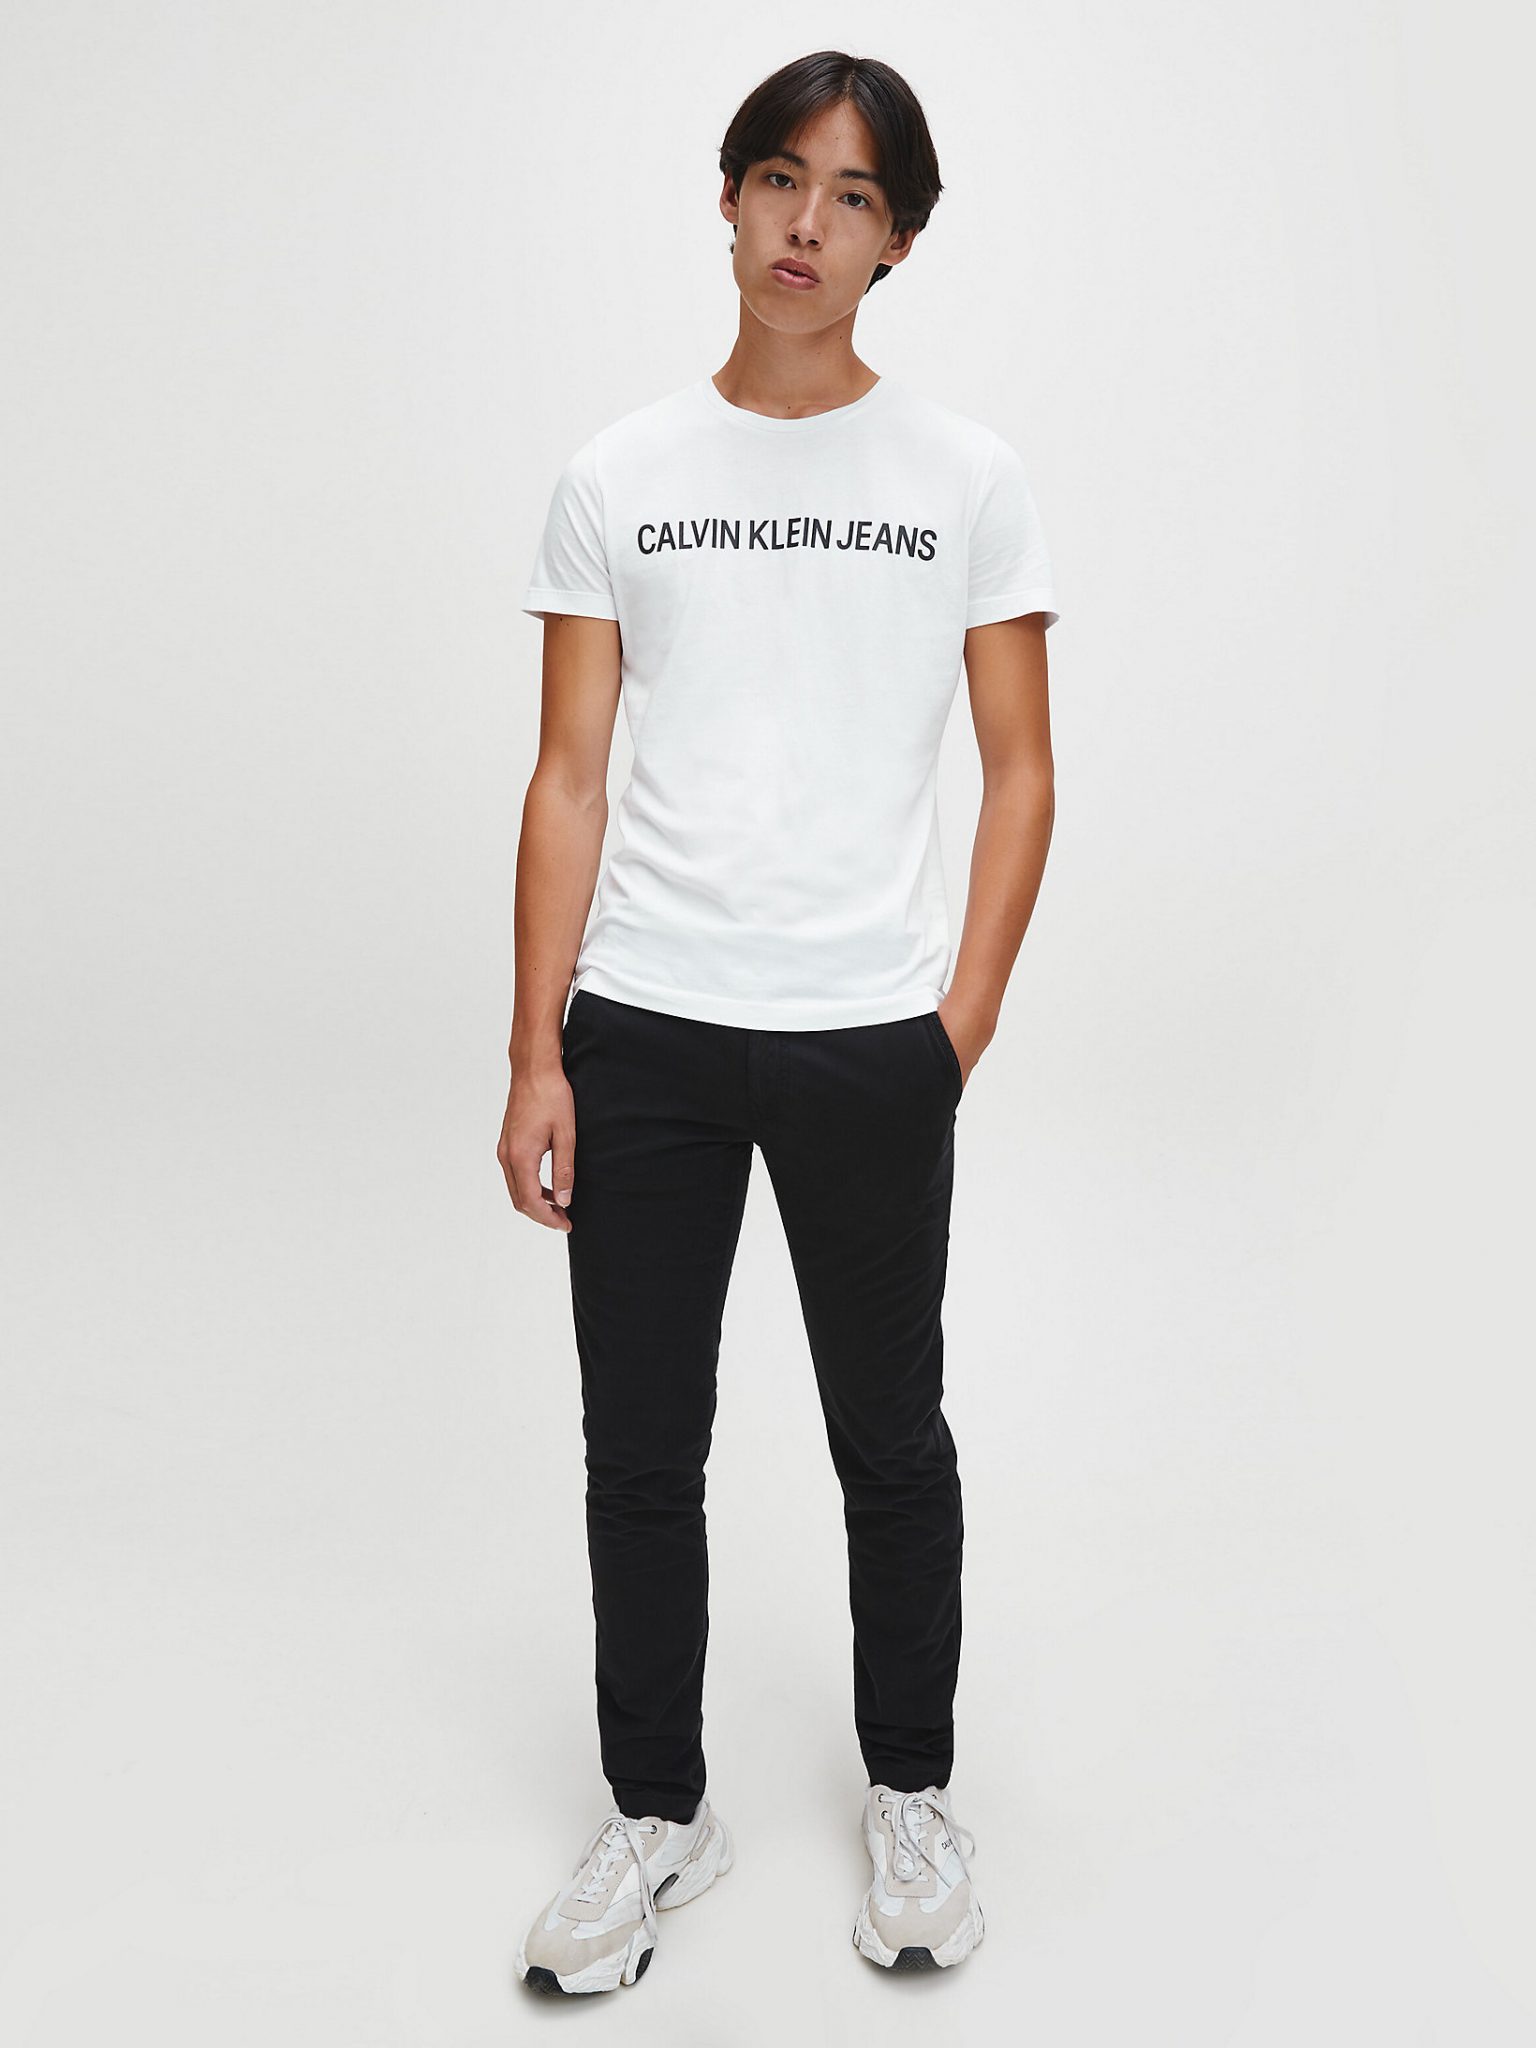 Buy Calvin Klein Institutional logo Scandinavian Fashion White T-shirt - Store Bright